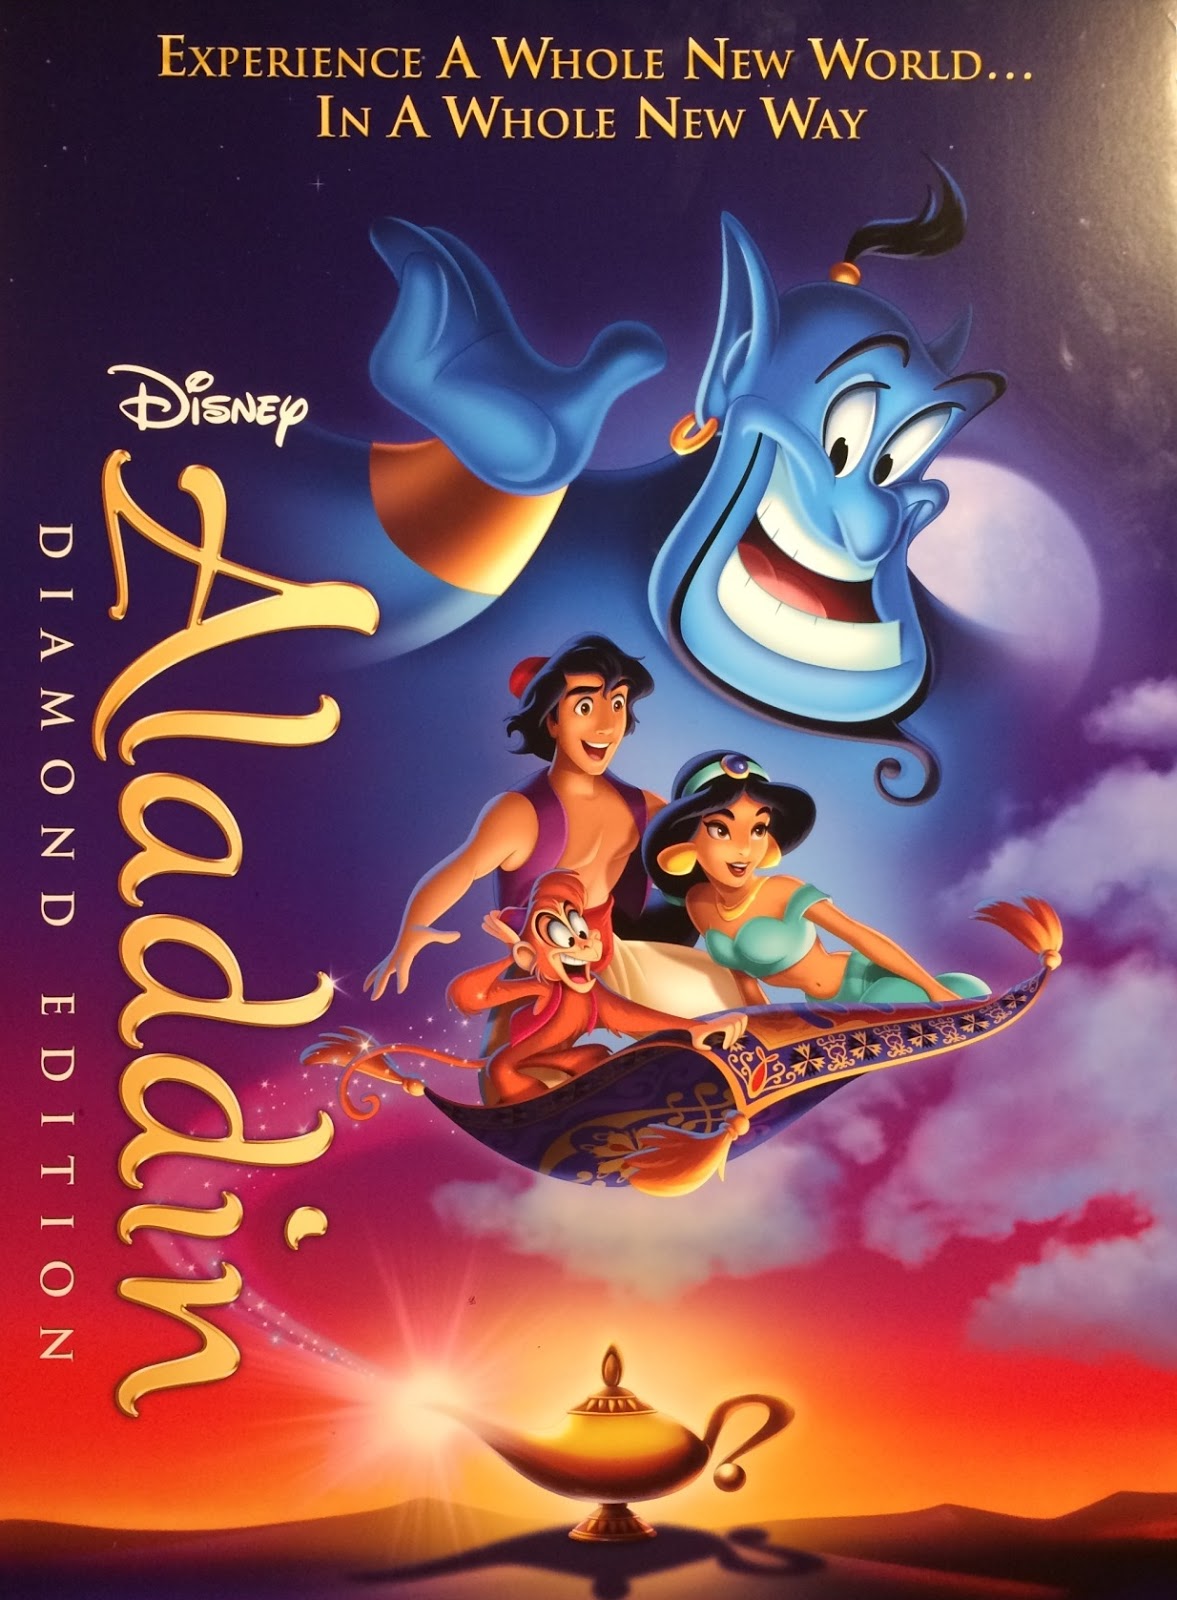 Disney's Aladdin #19